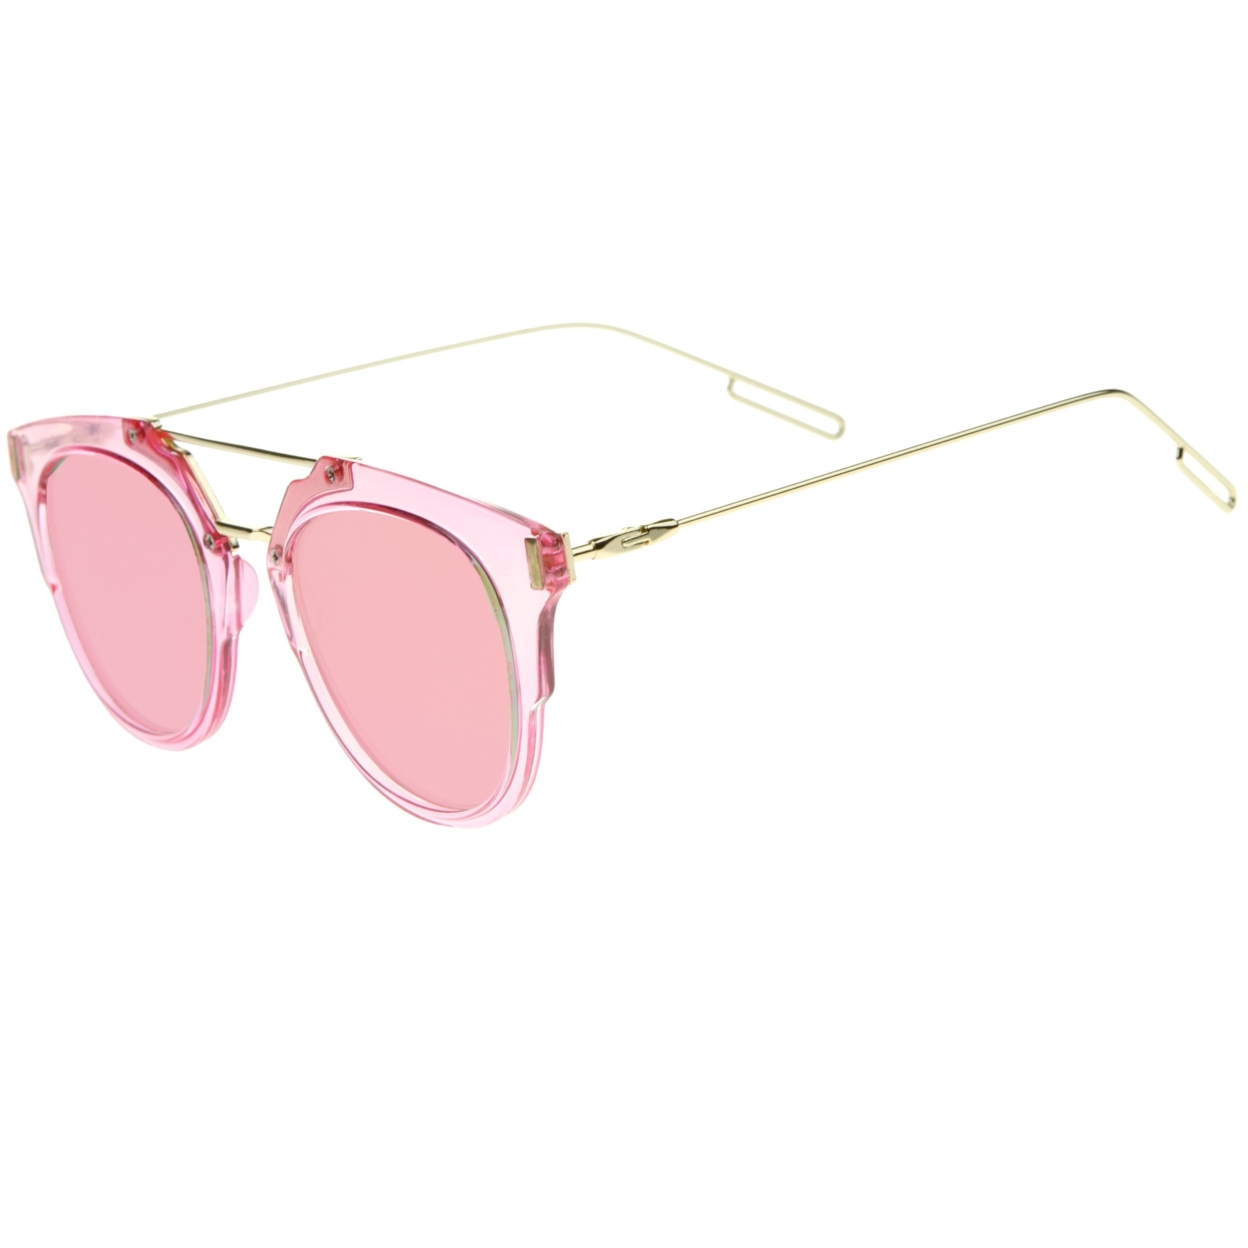 Colorful Fashion Translucent Color Mirrored Flat Lens Pantos Sunglasses 45mm - Fuchsia-Gold / Magenta Mirror